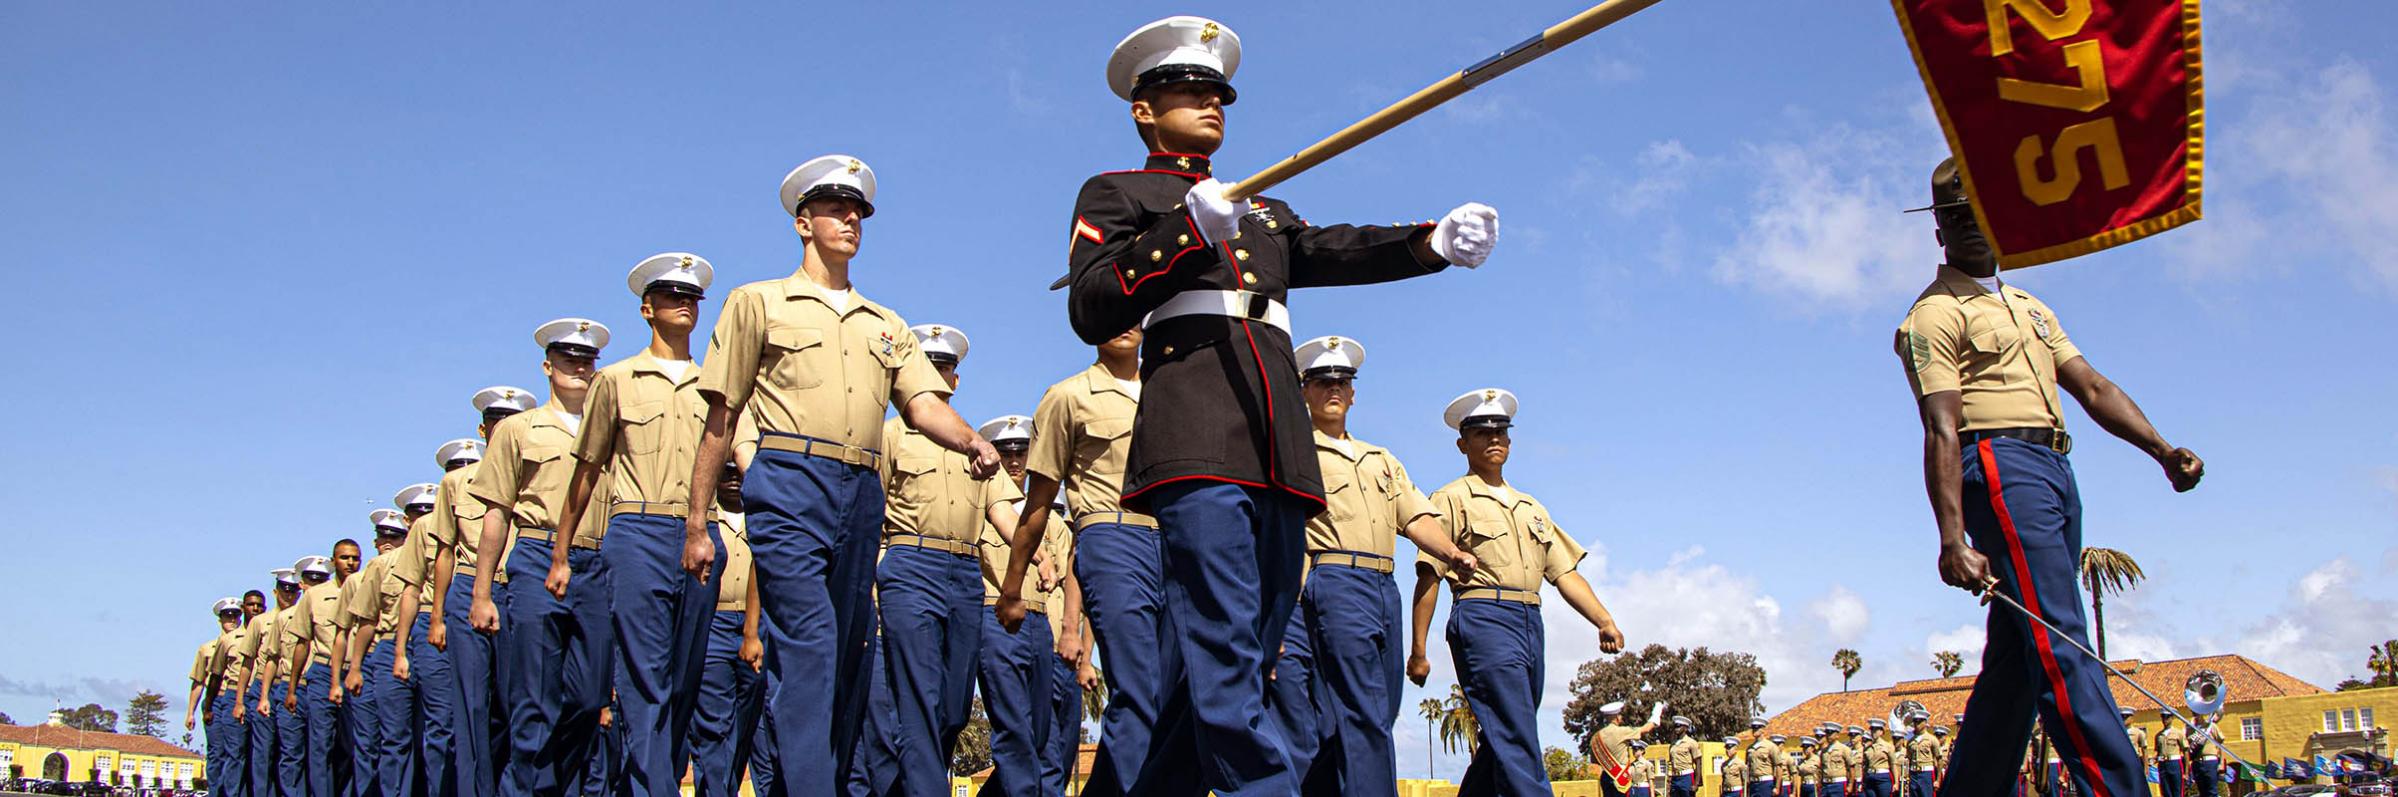 Image of new Marines at MCRD San Diego boot camp graduation.